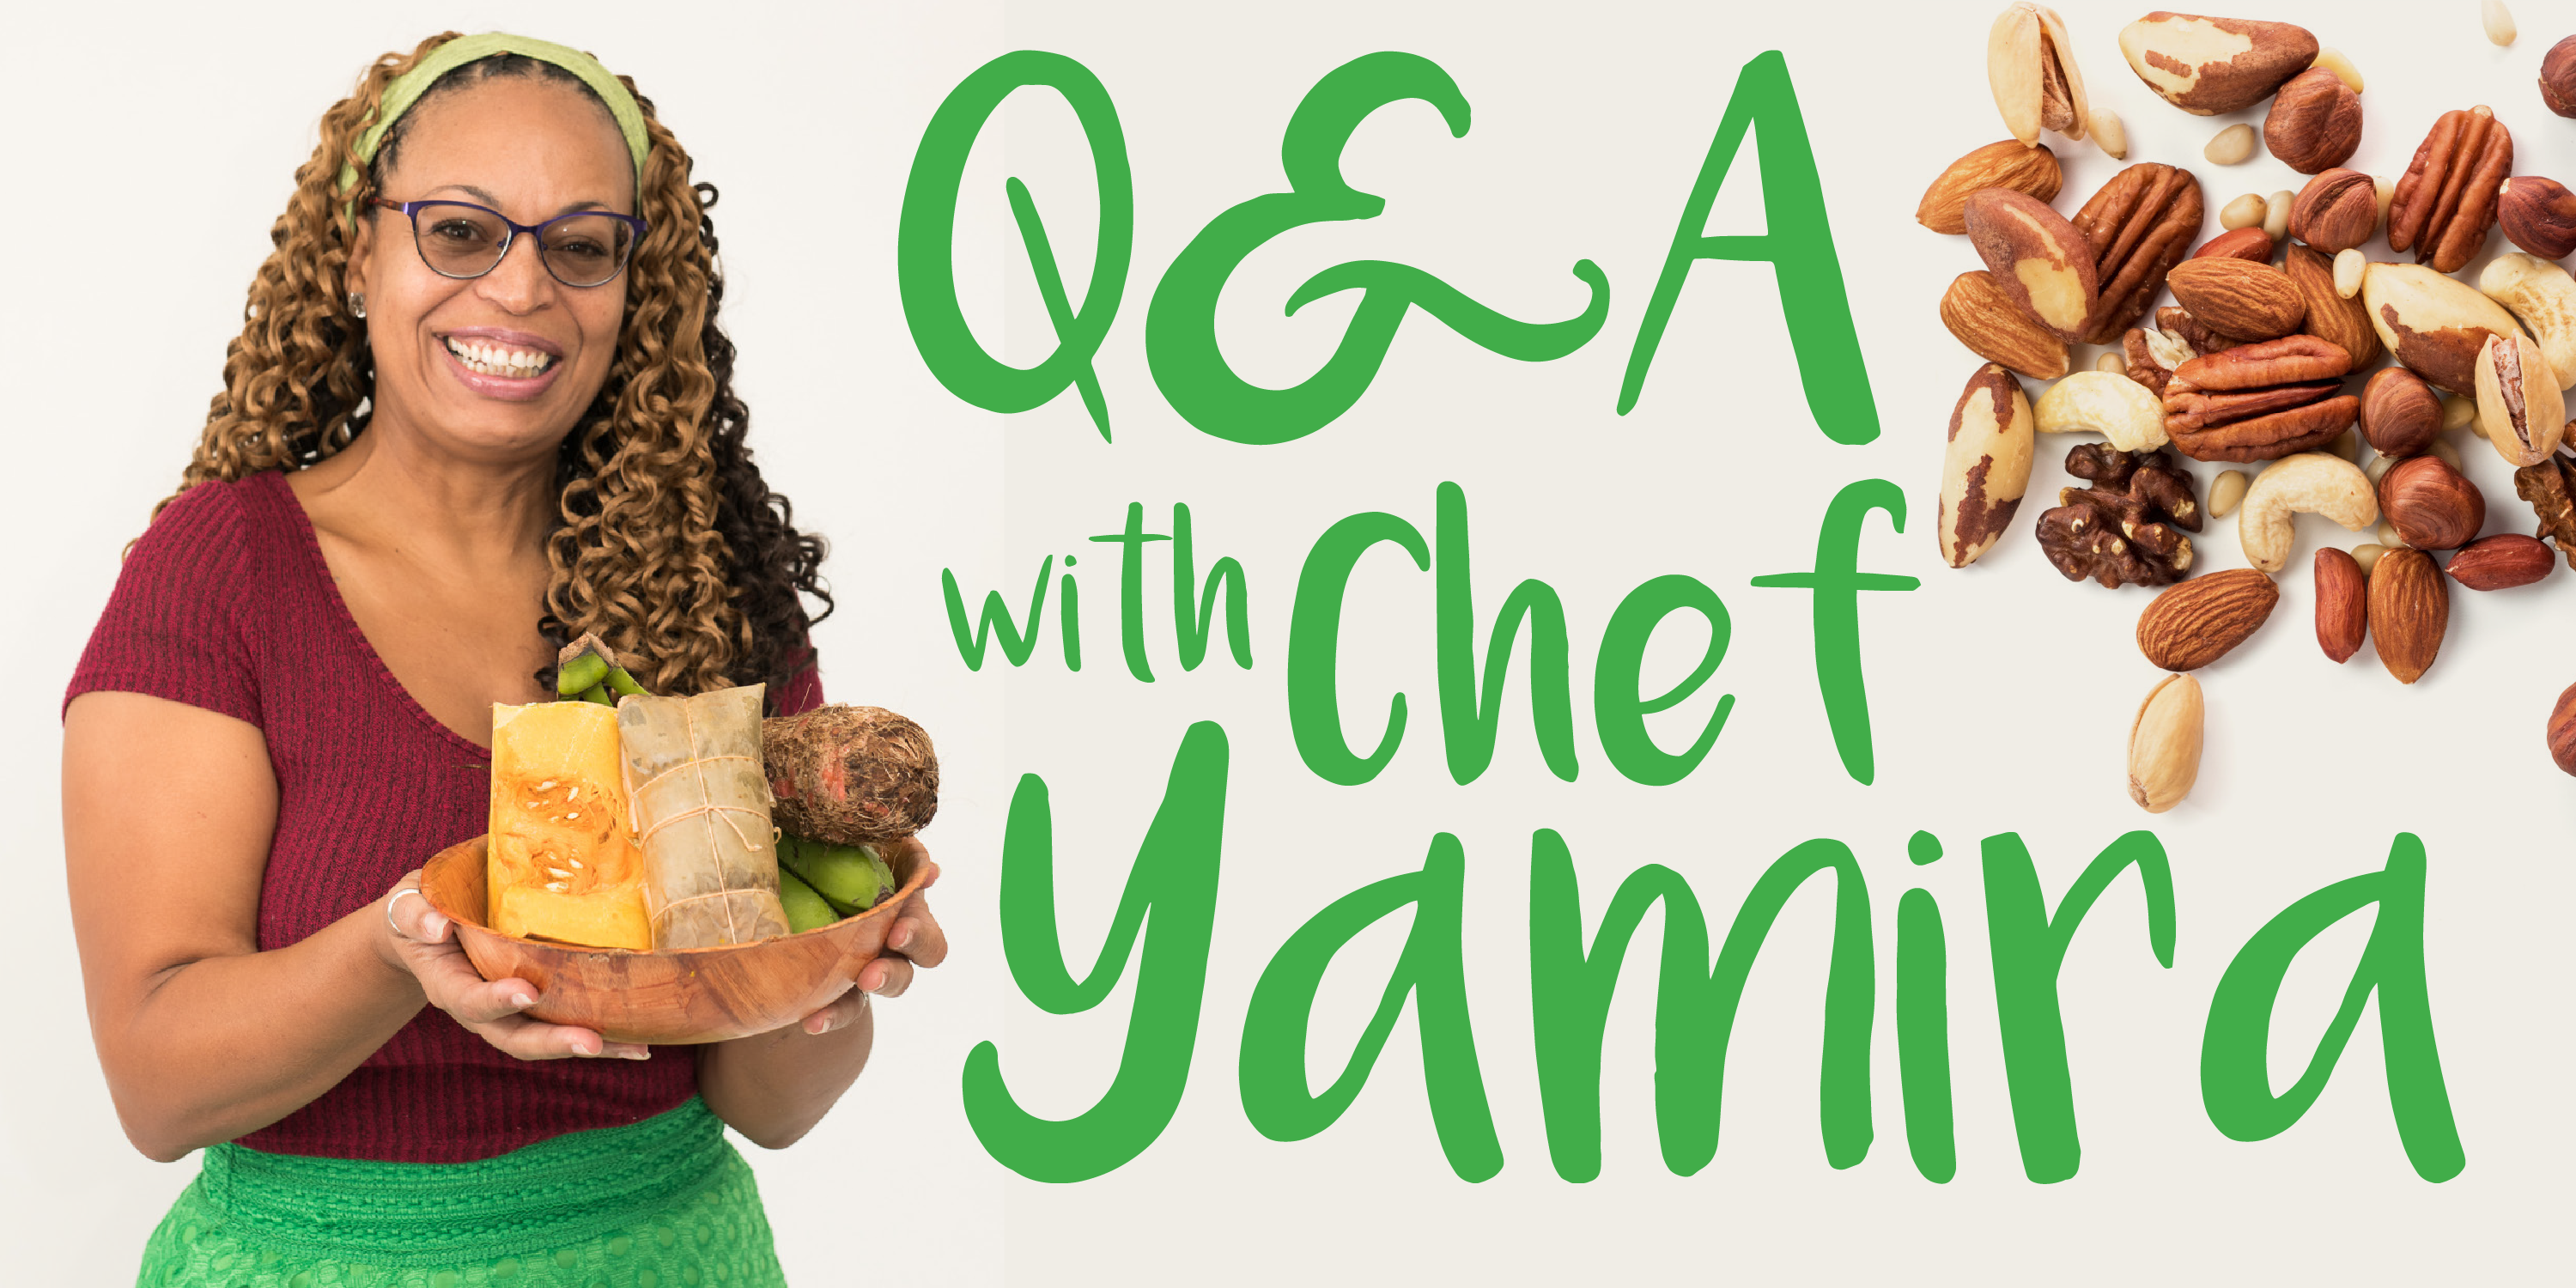 Q&A with Chef Yamira